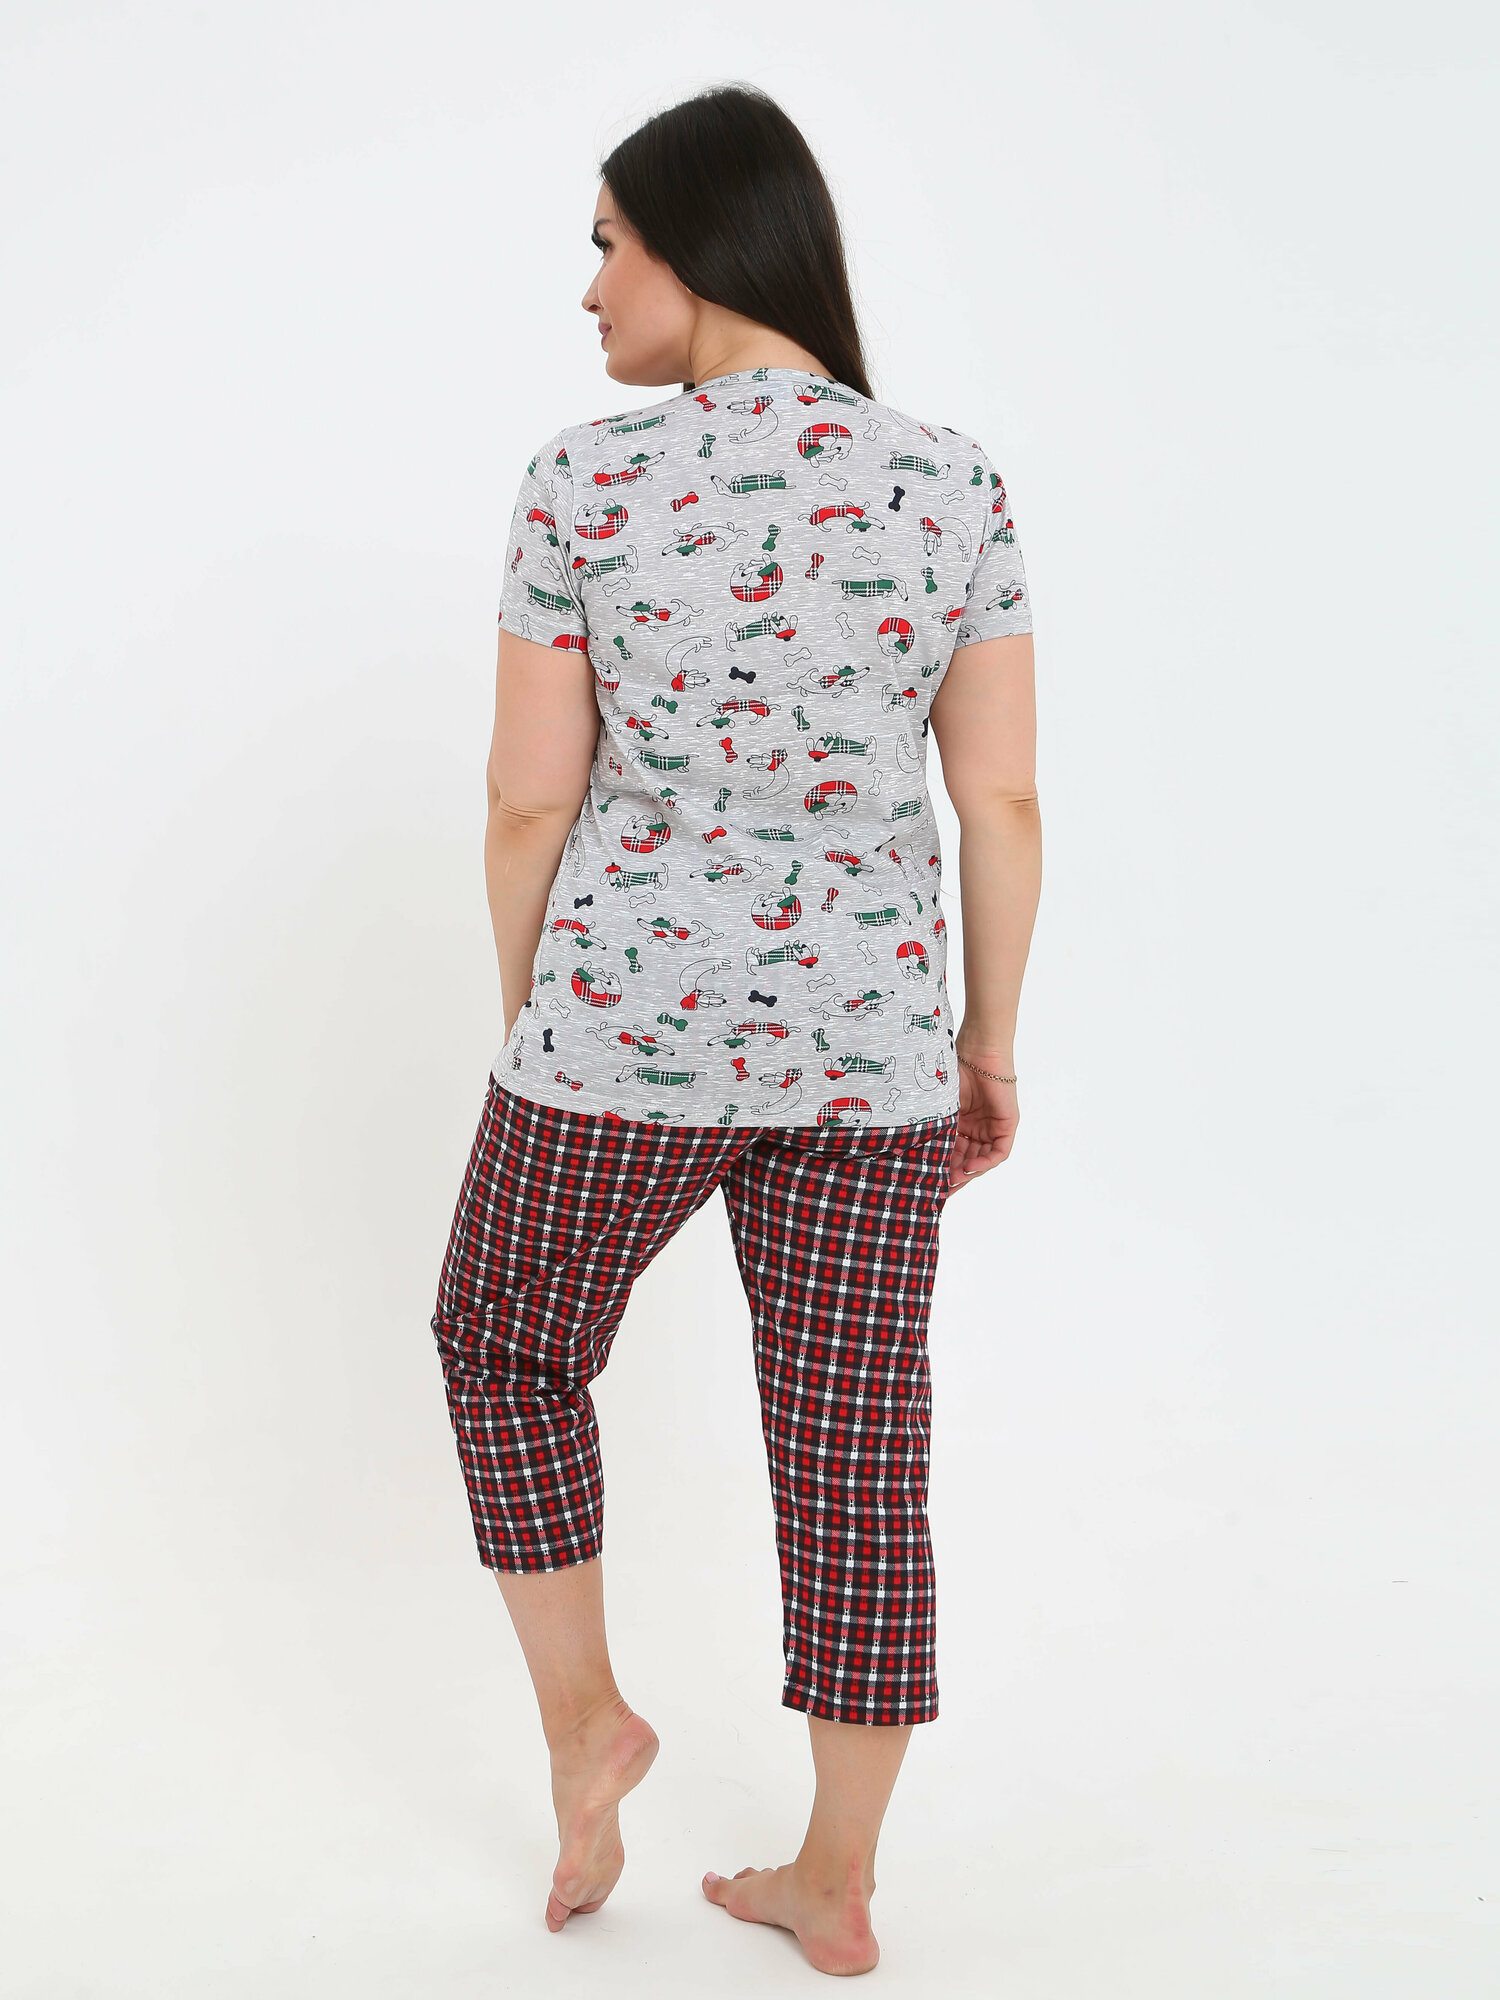 Пижама Soft Home, футболка, бриджи, короткий рукав, трикотажная, карманы, размер 52, серый - фотография № 8